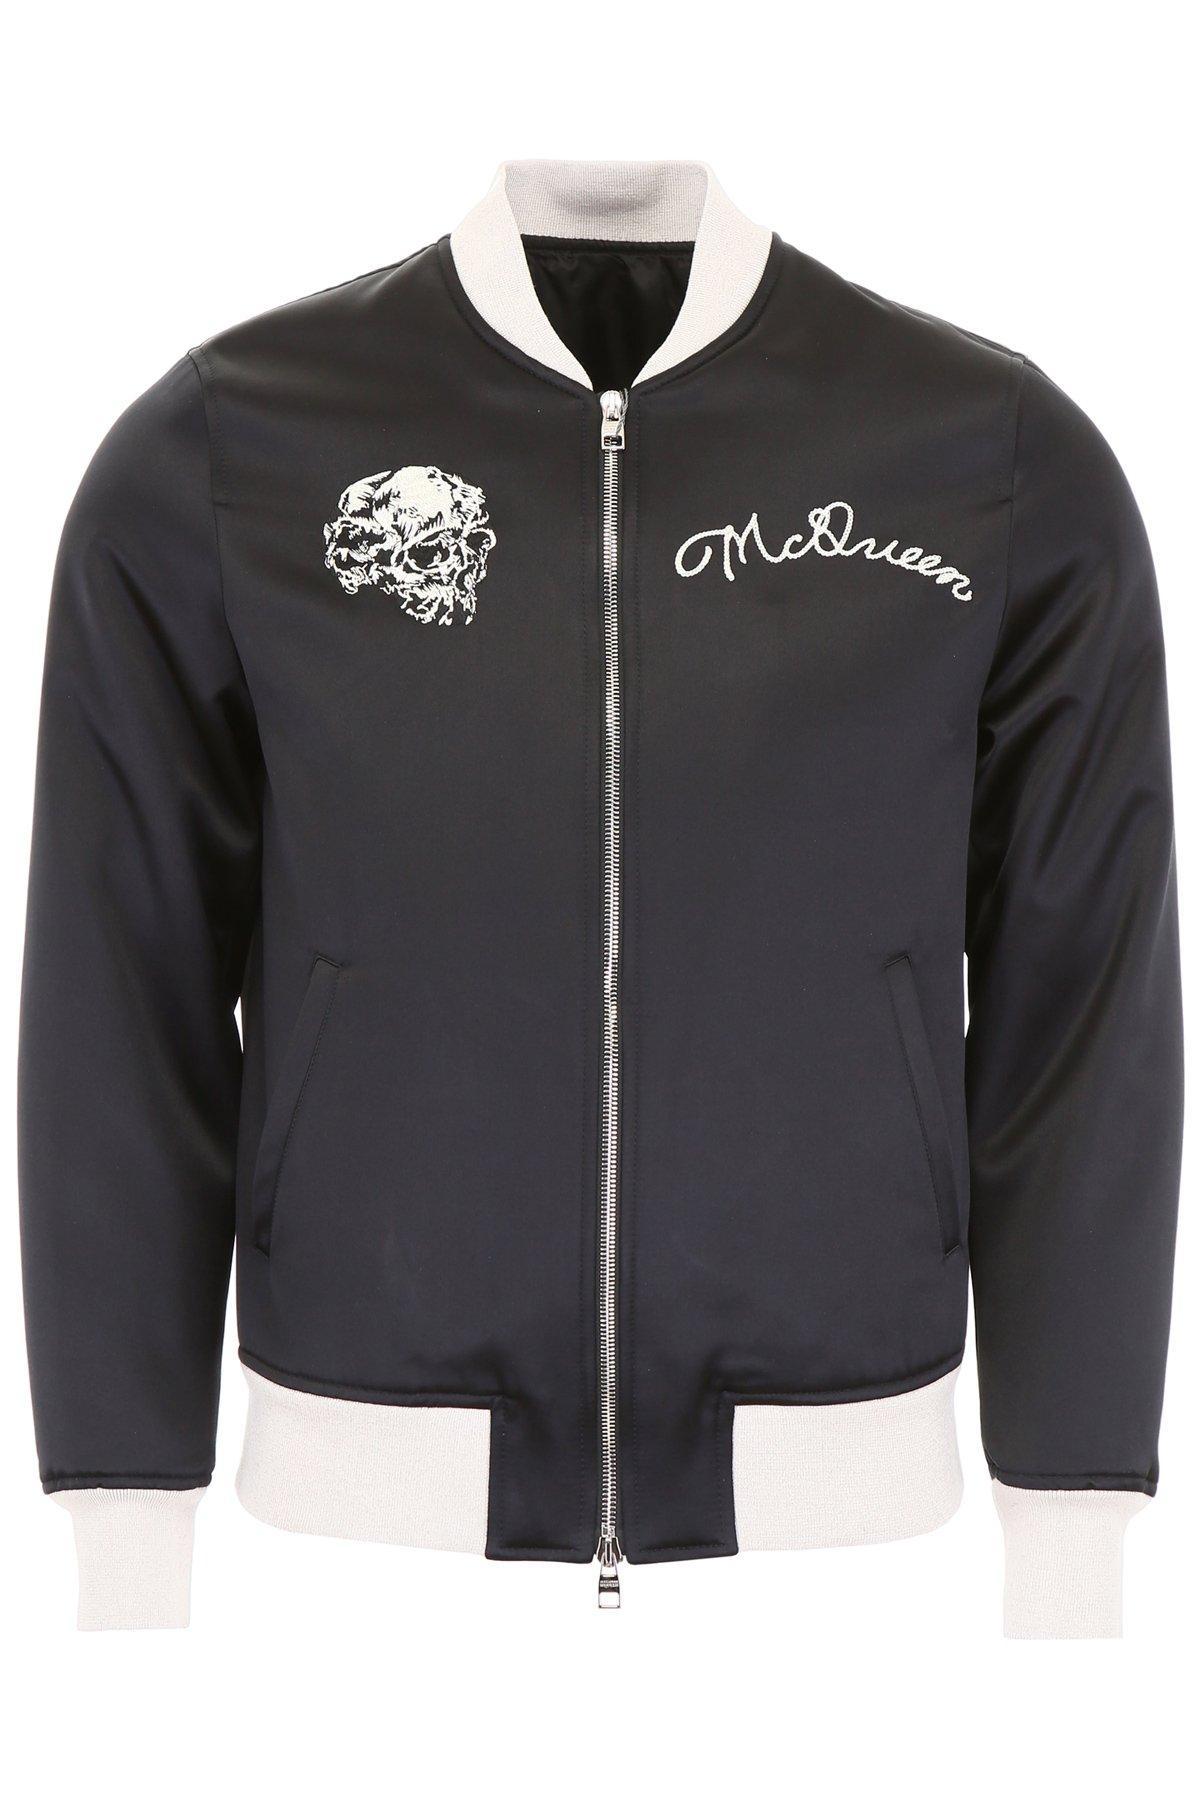 Alexander McQueen Cotton Skeleton Bomber Jacket in Black for Men - Lyst